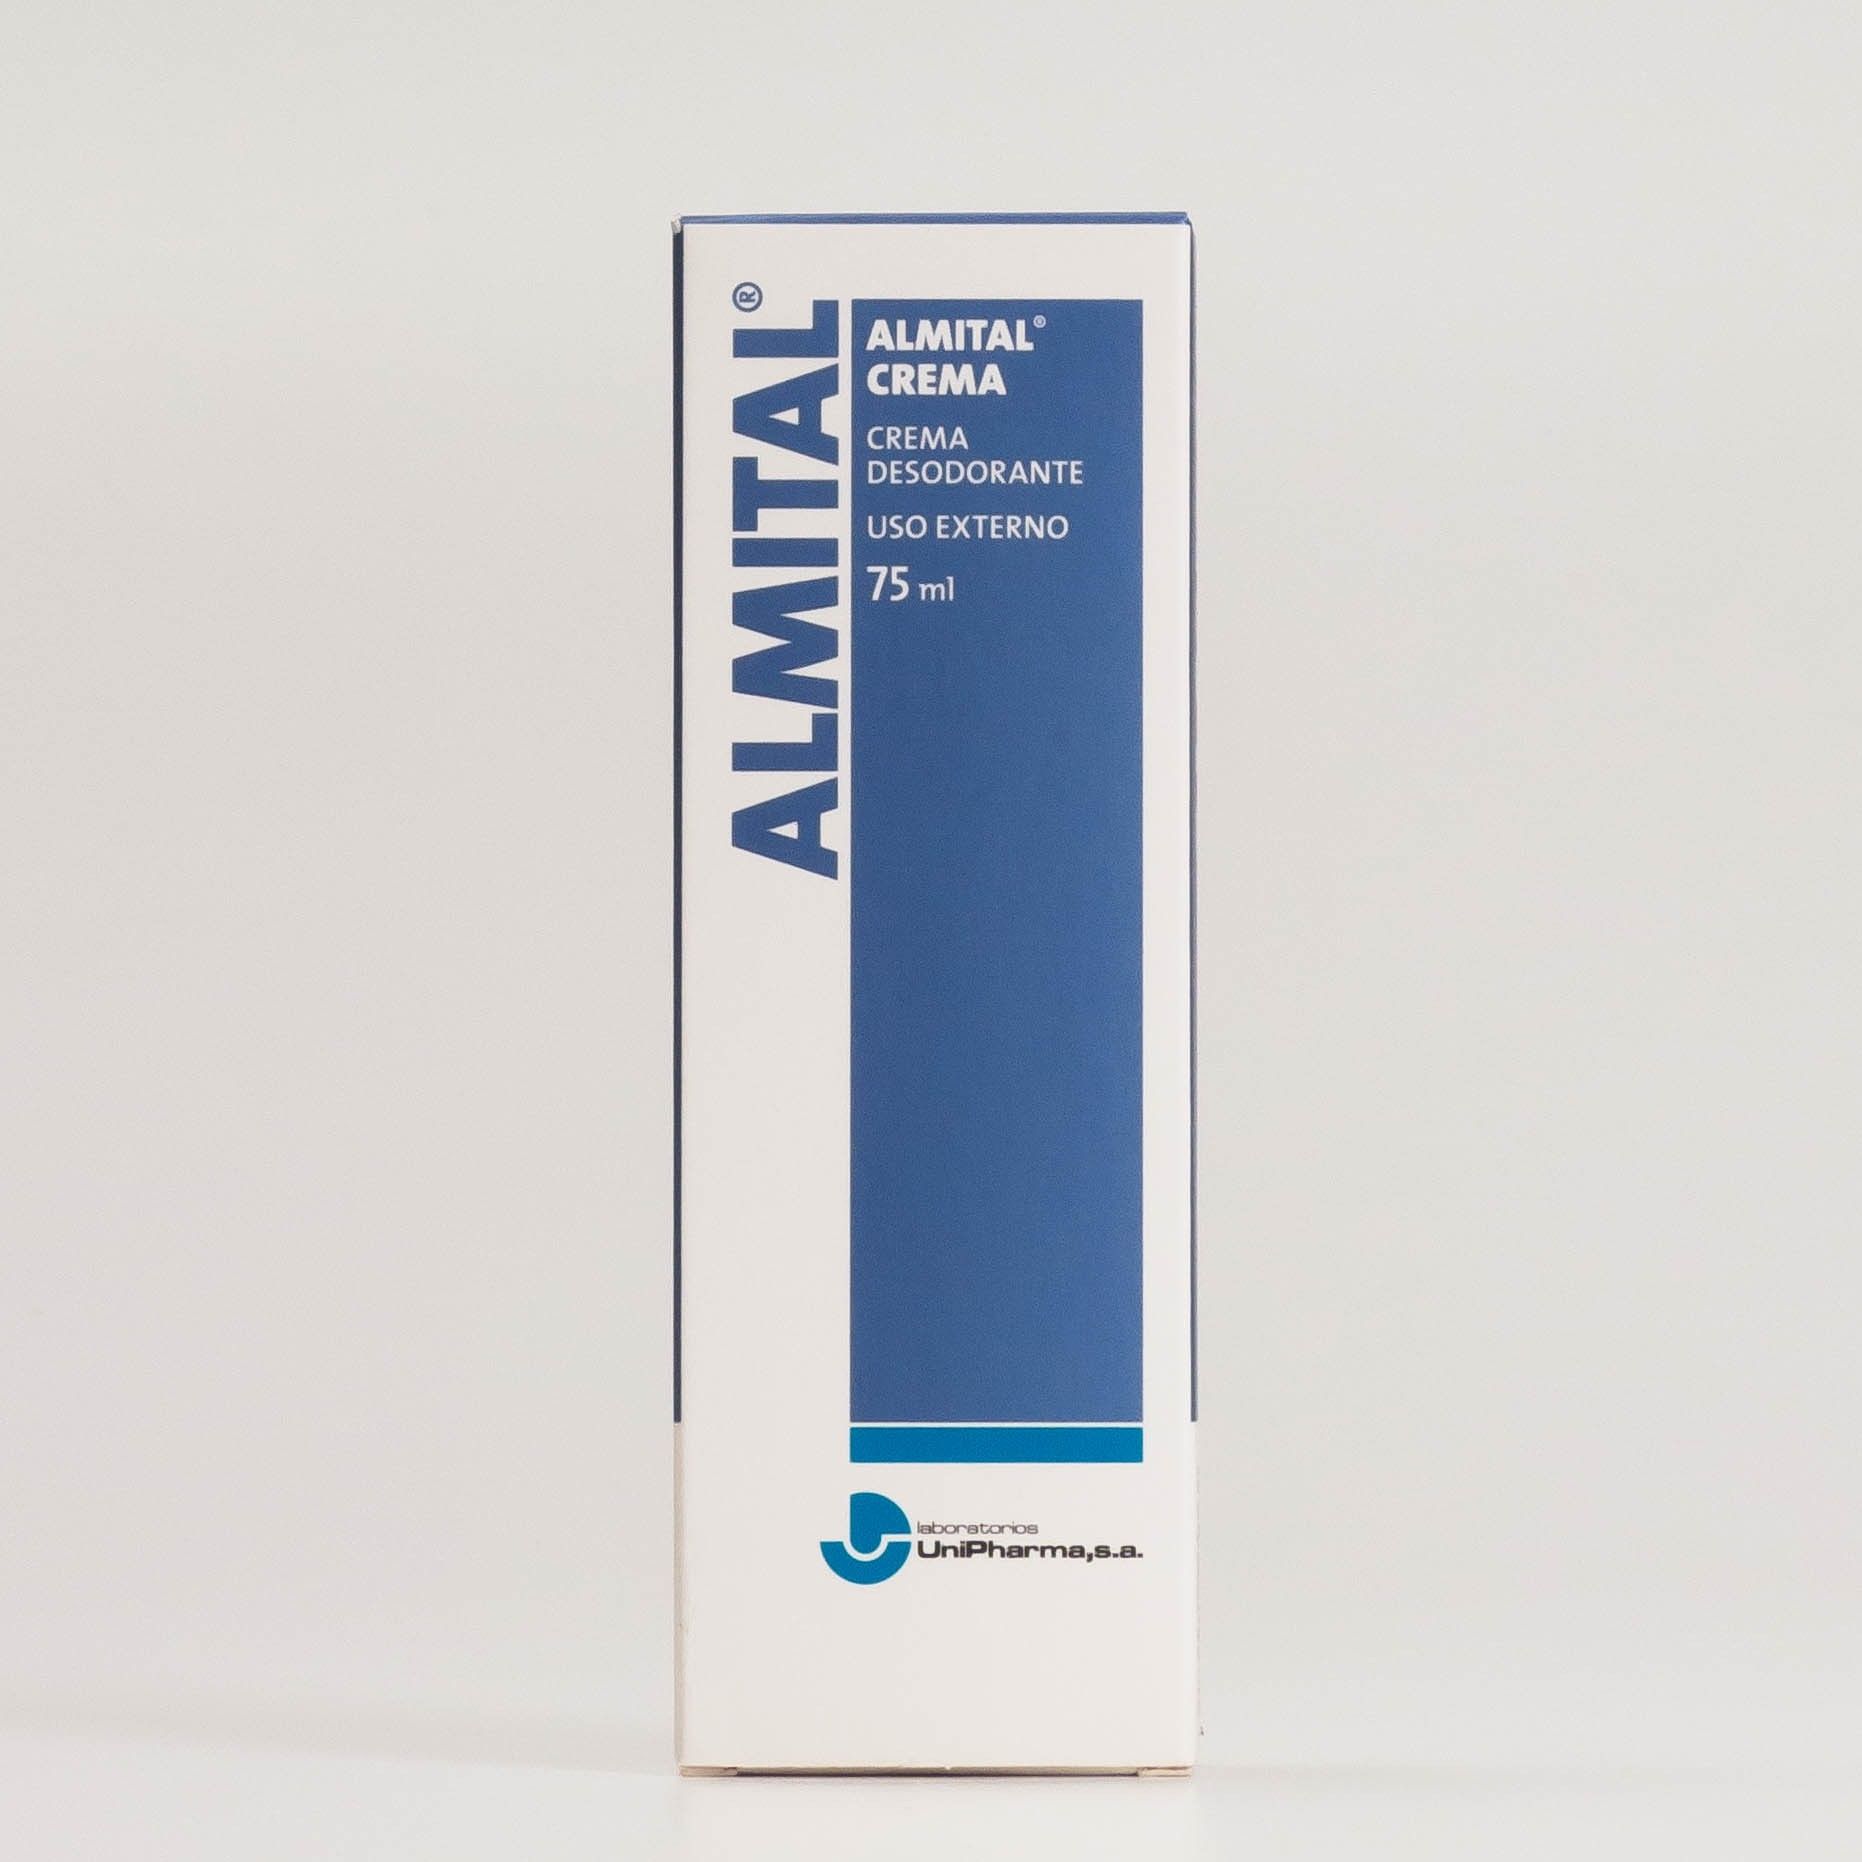 Almital Neo Creme Desodorante, 75 ml